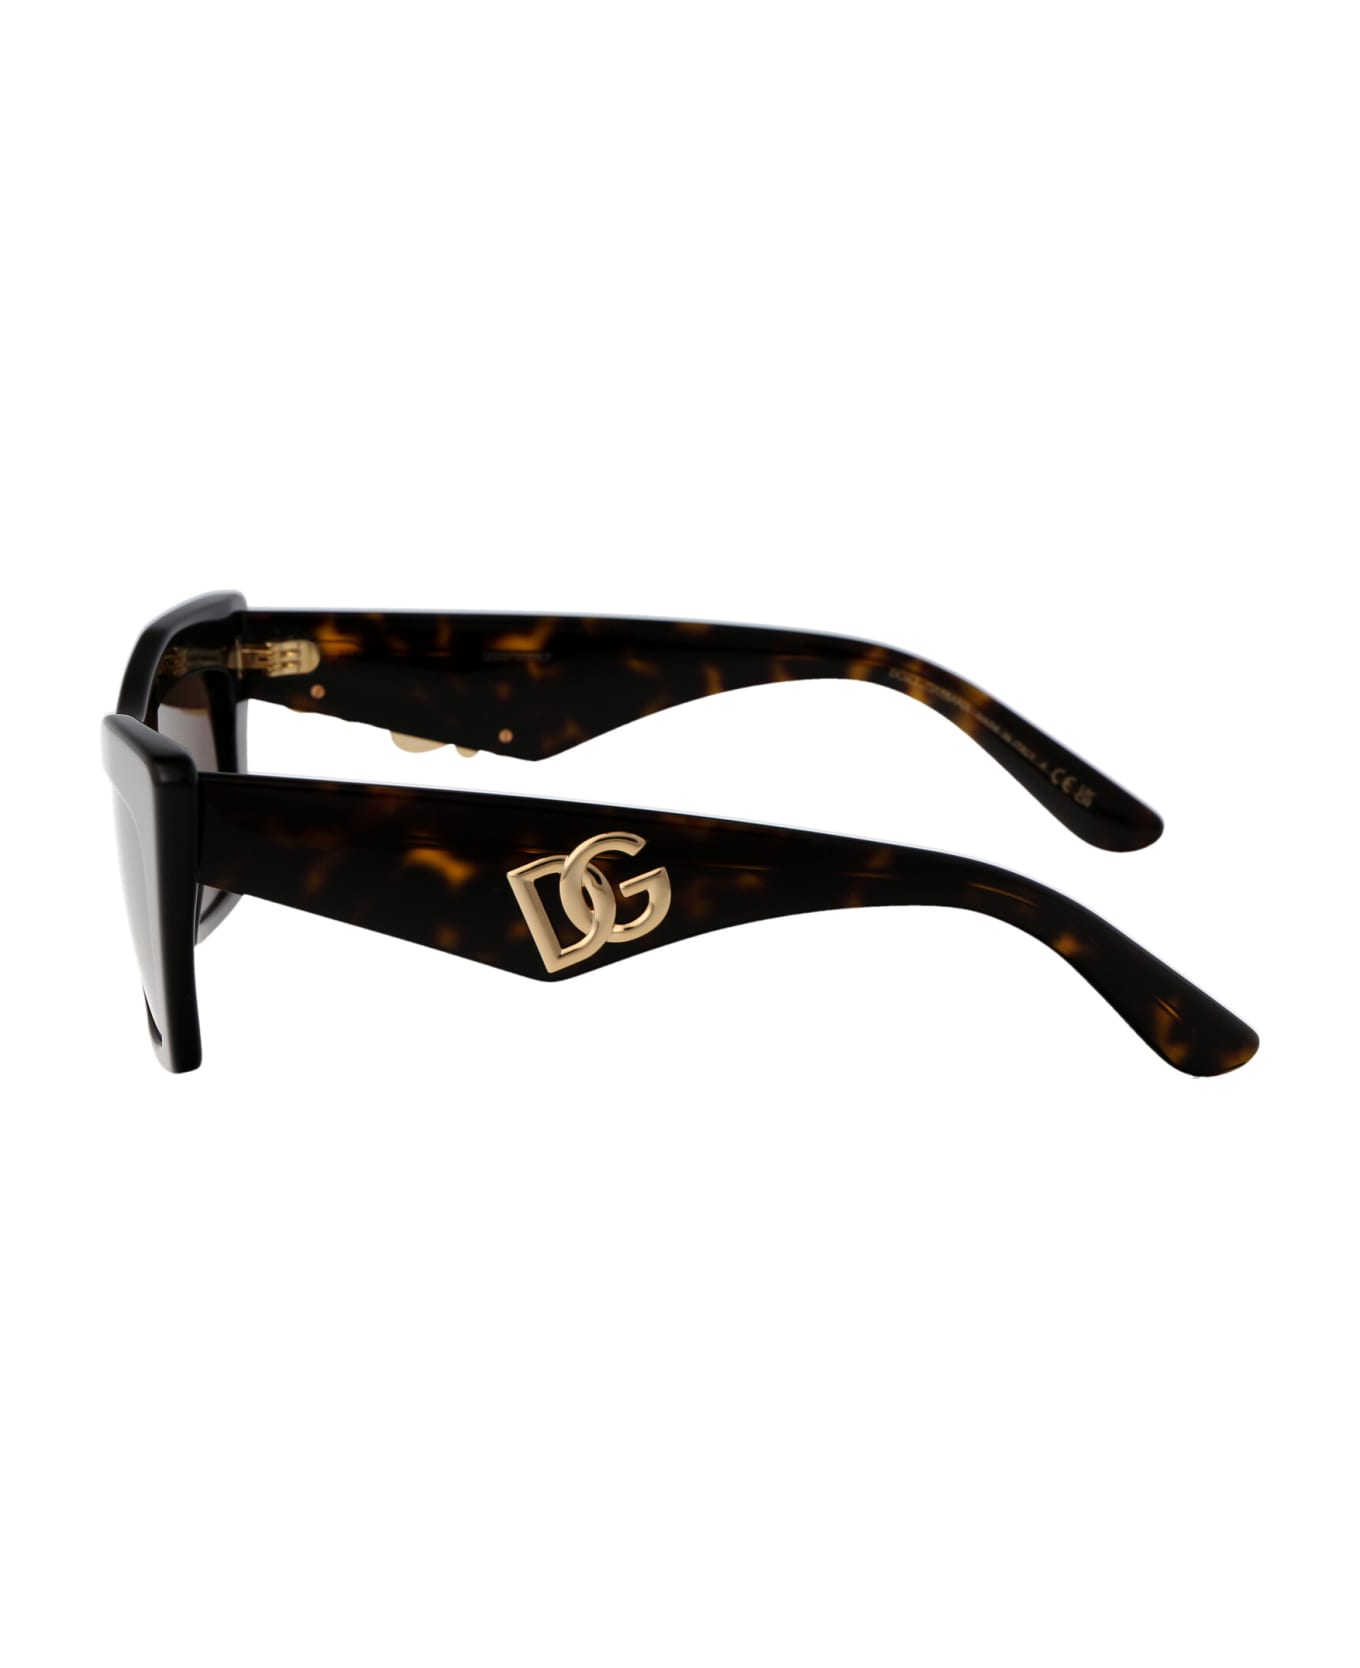 Dolce & Gabbana Eyewear 0dg4435 Sunglasses - 502/73 HAVANA サングラス